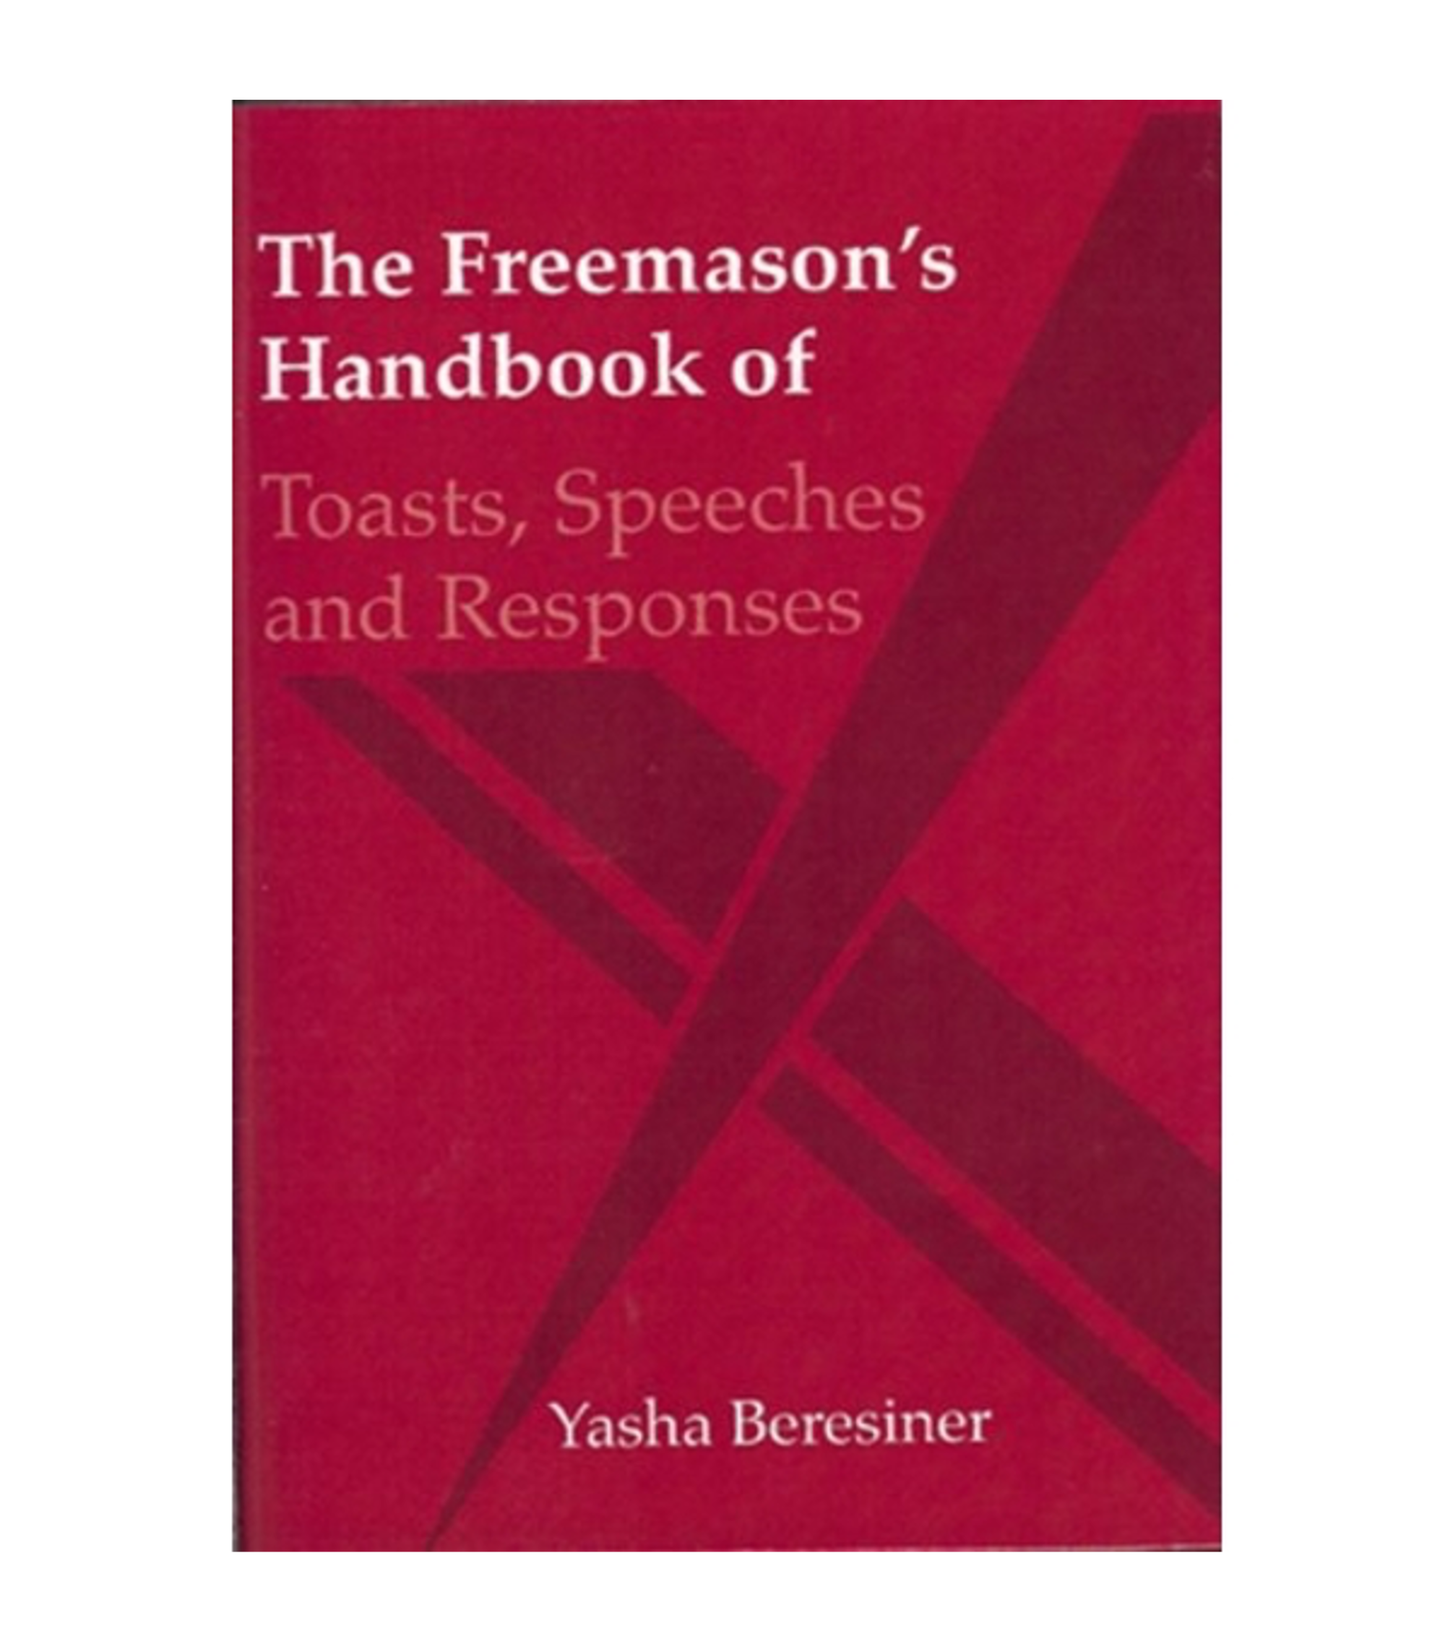 Freemason's Handbook of Toasts and Responses